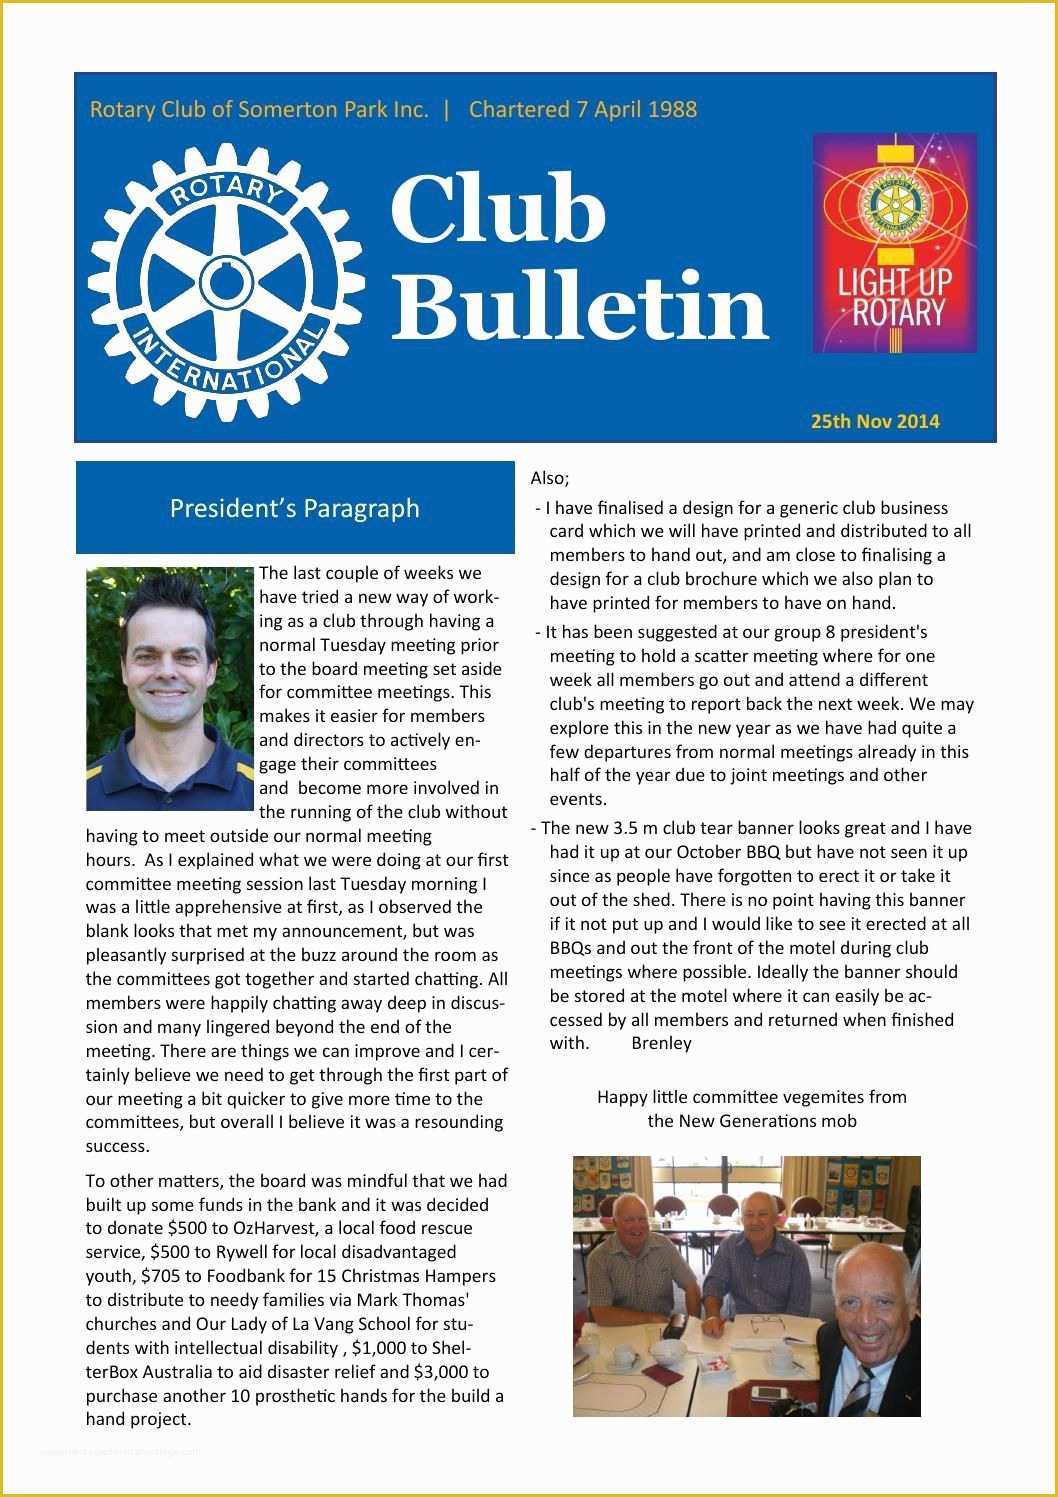 Free News Bulletin Templates Of Rotary Club Of somerton Park Bulletin 25 11 2014